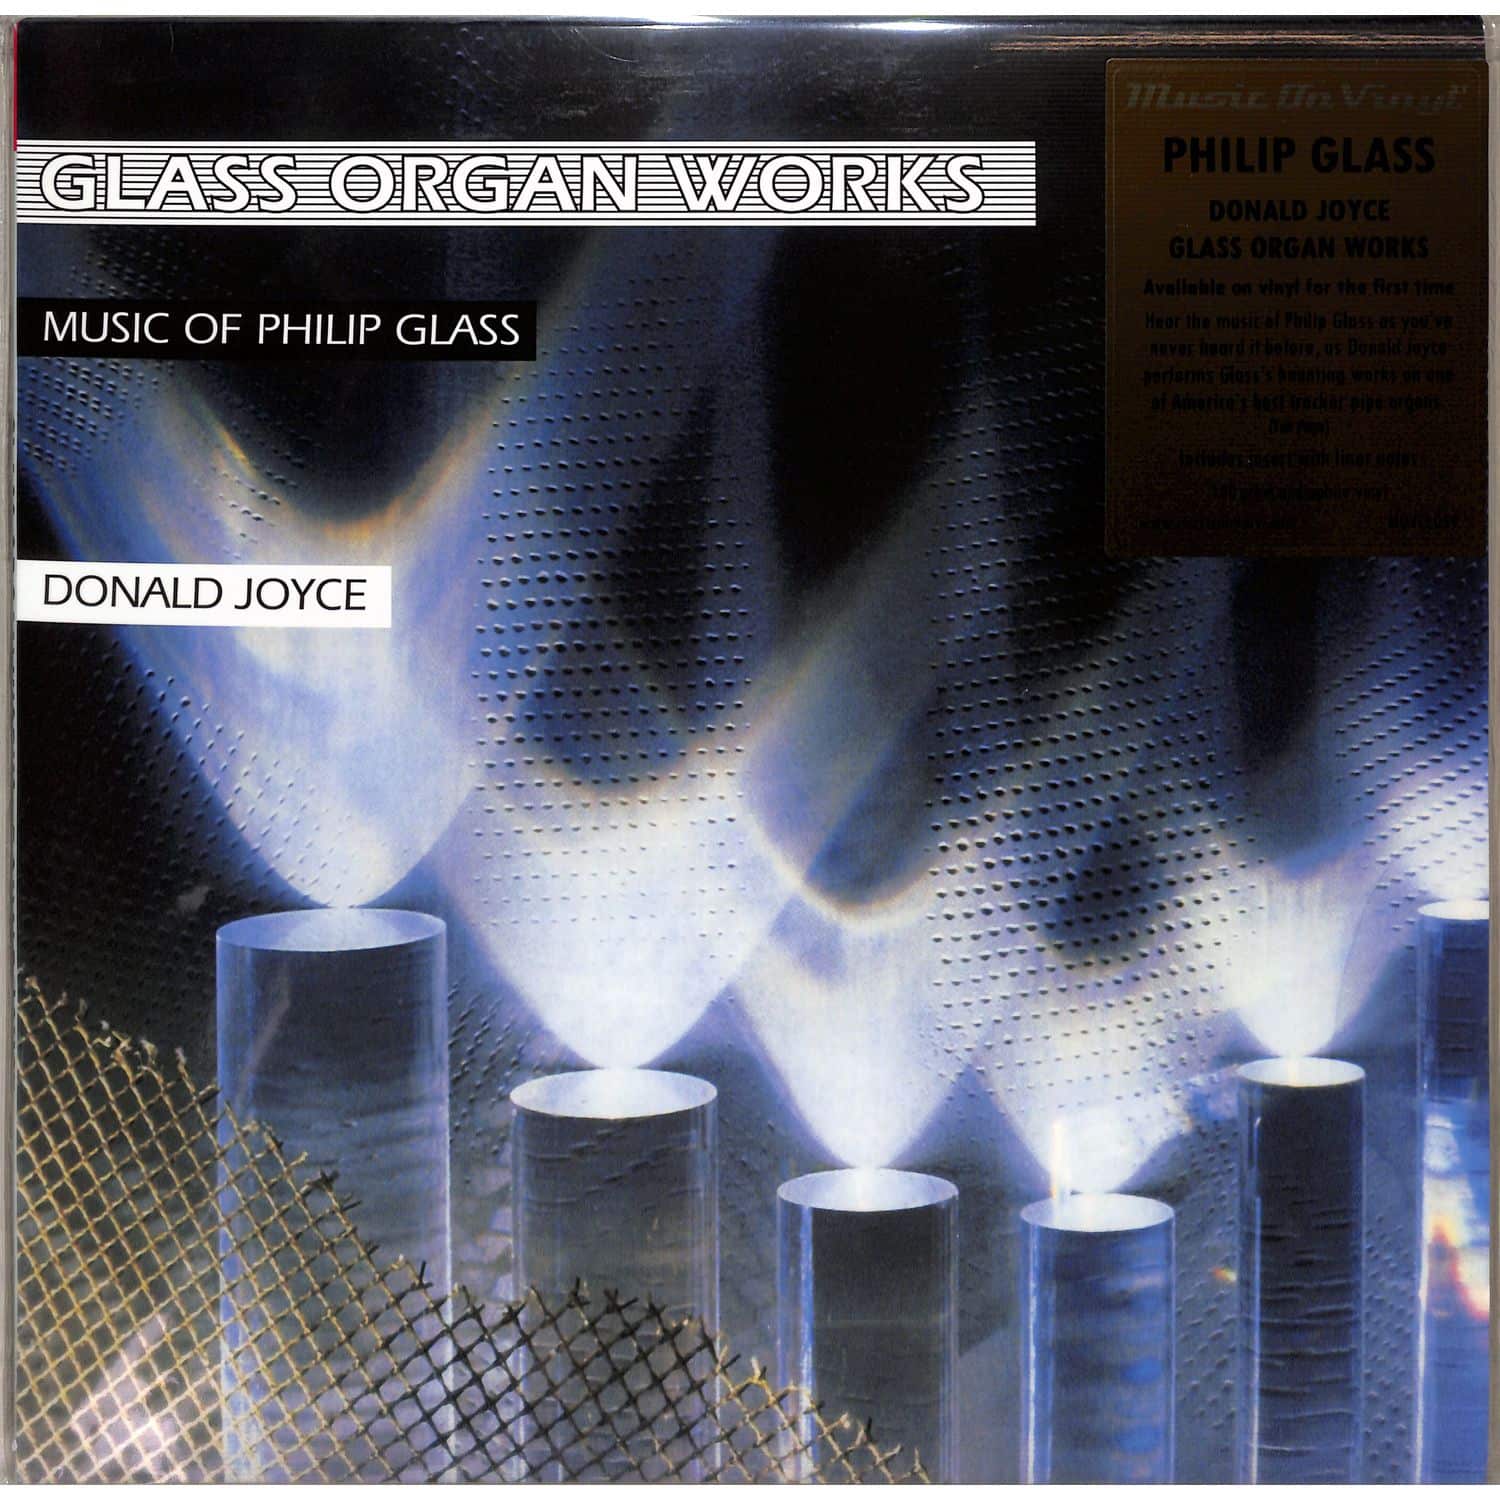 Philip Glass & Donald Joyce - GLASS ORGAN WORKS 